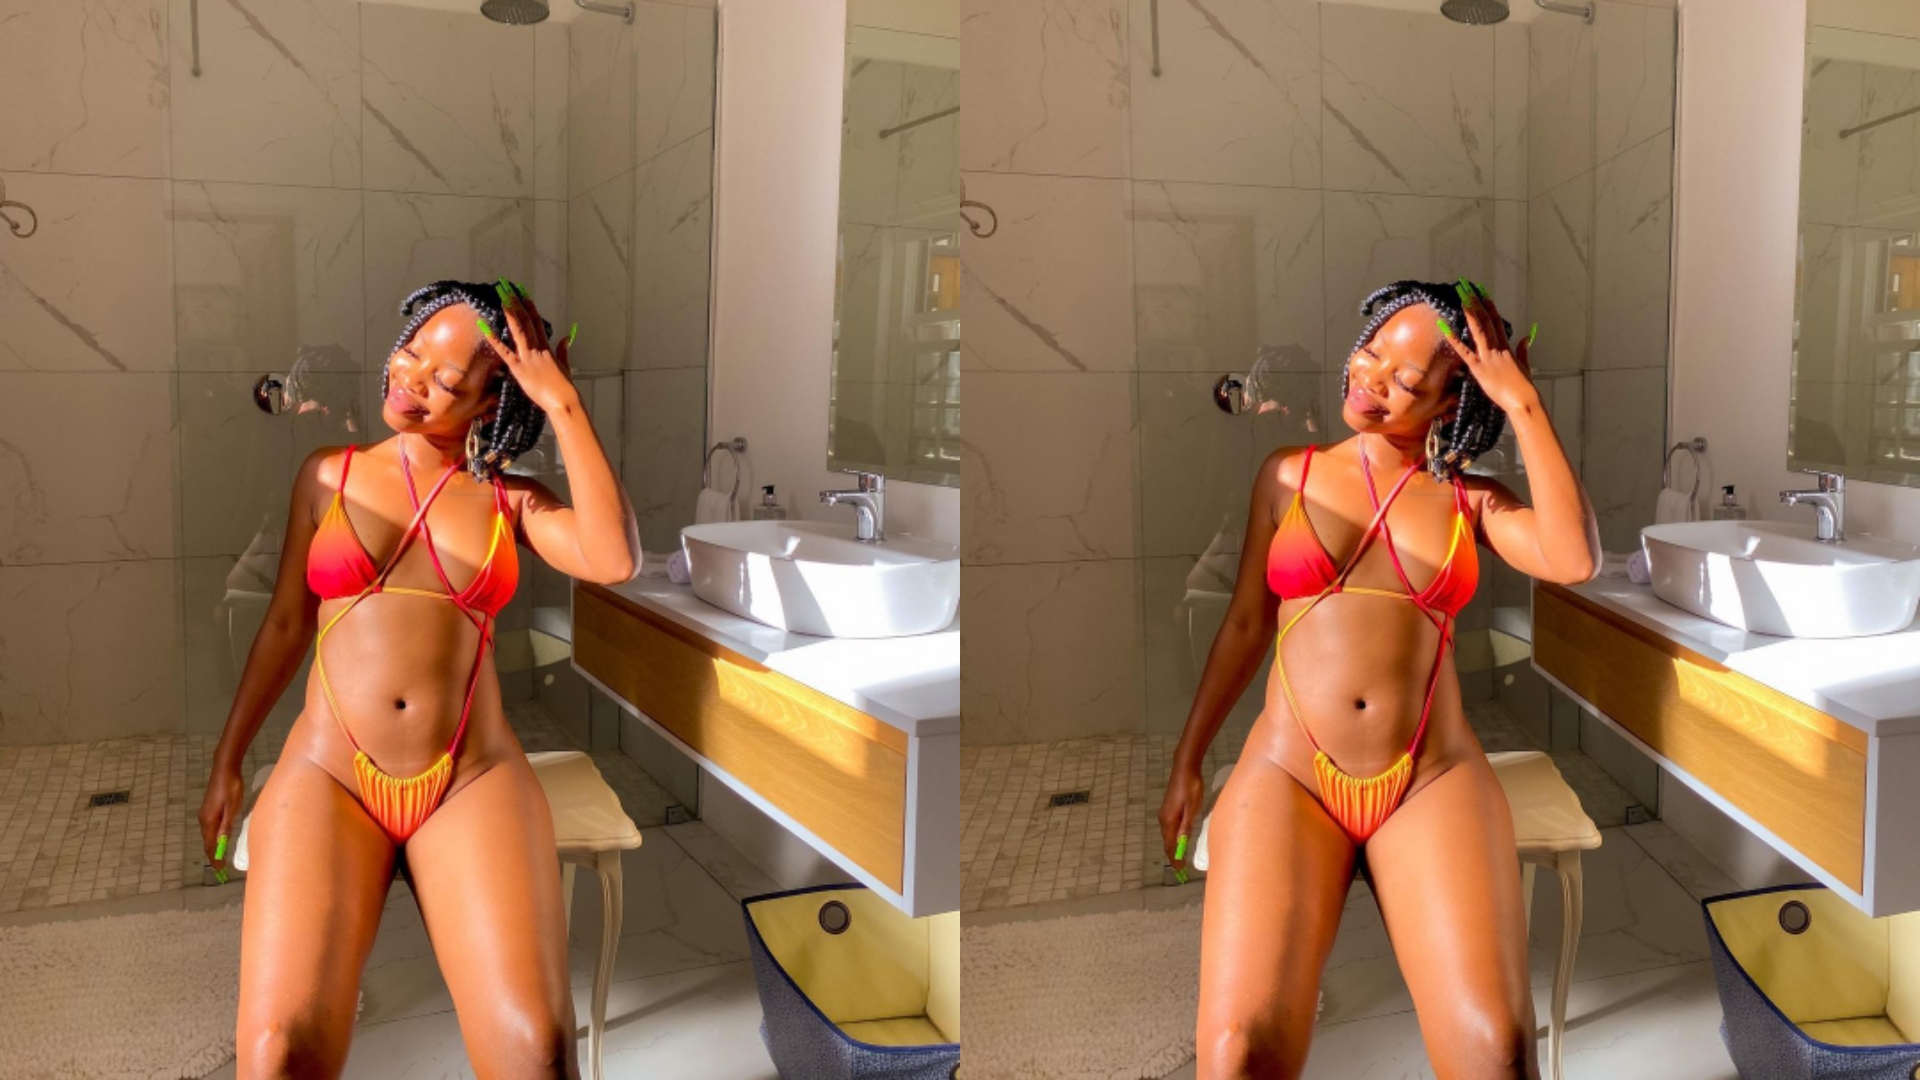 Mutoni Etania Shows off 'Katone' in New Bikini Photoshoot